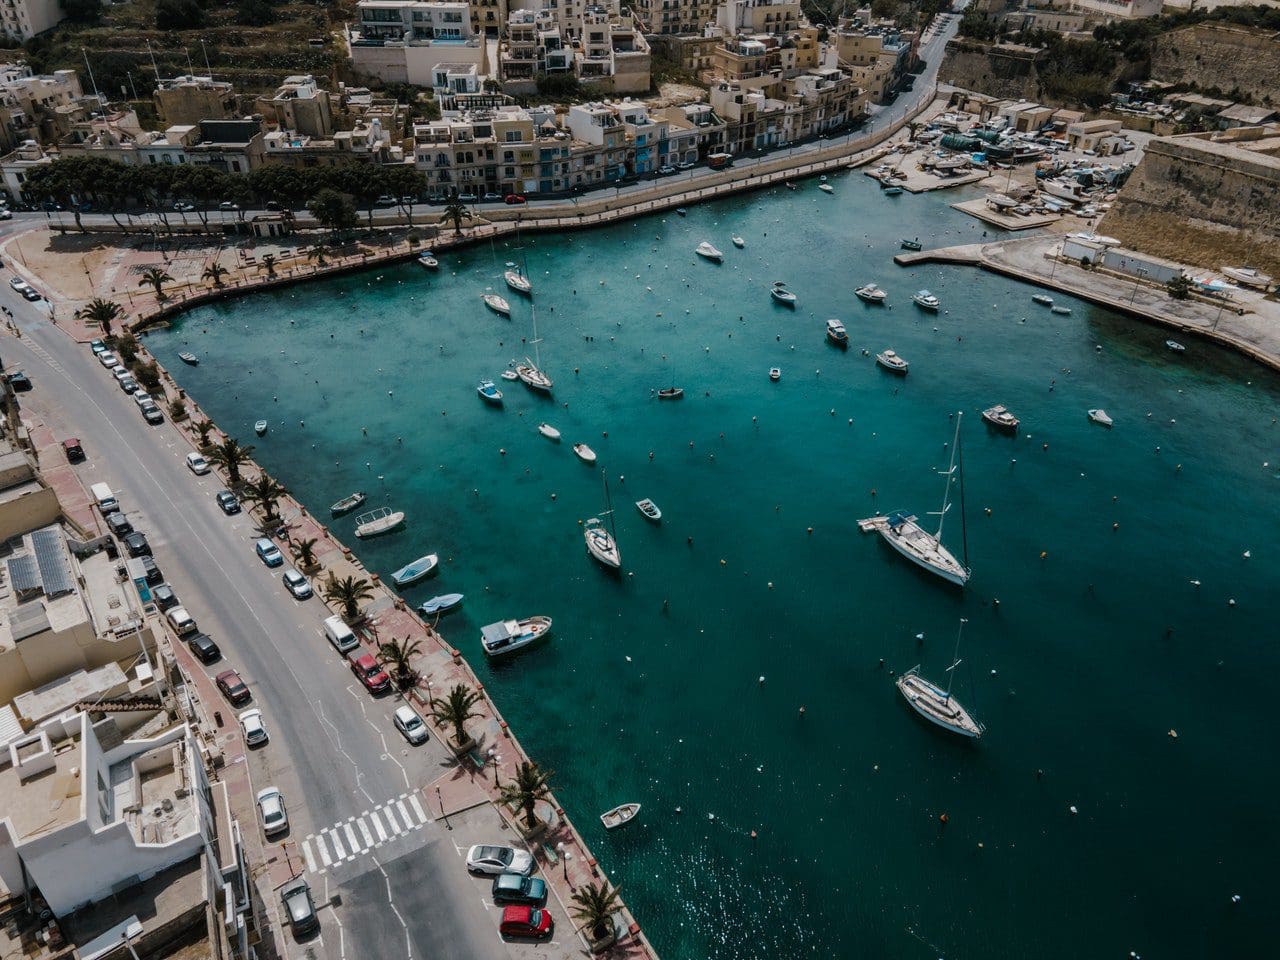 Marinas in Malta: Showcasing the Beauty of This Mediterranean Island Gem